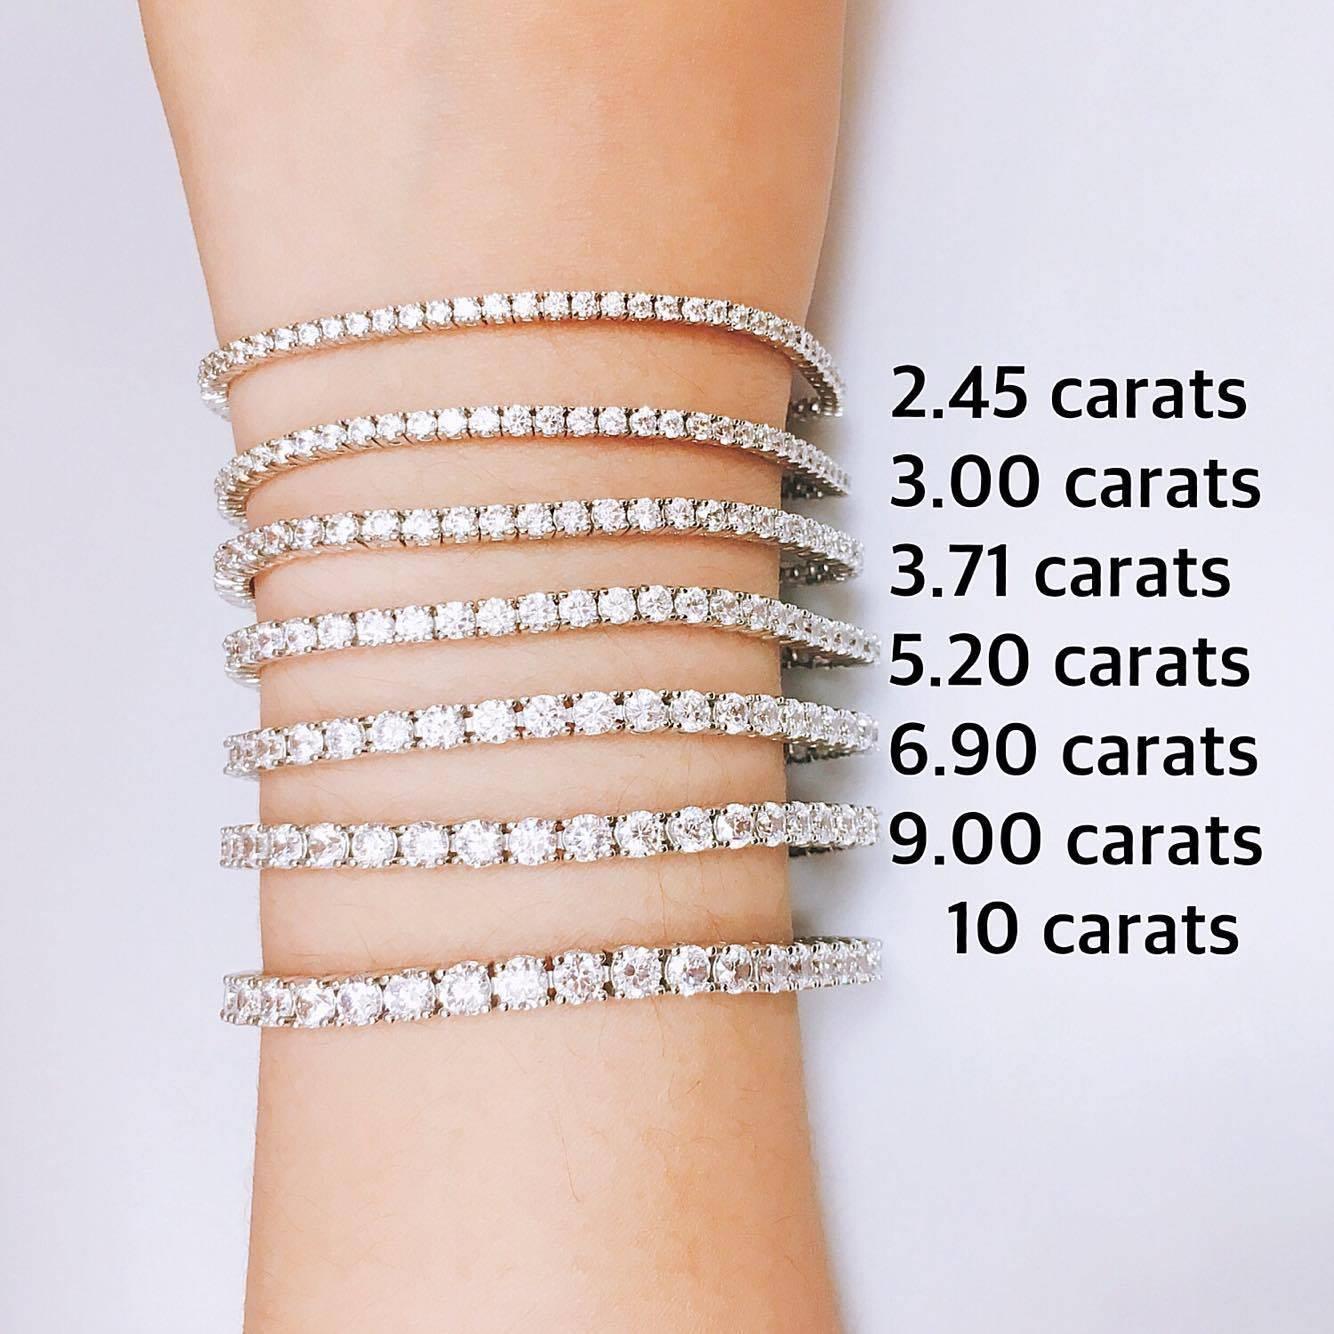 10 carat tennis bracelet on wrist